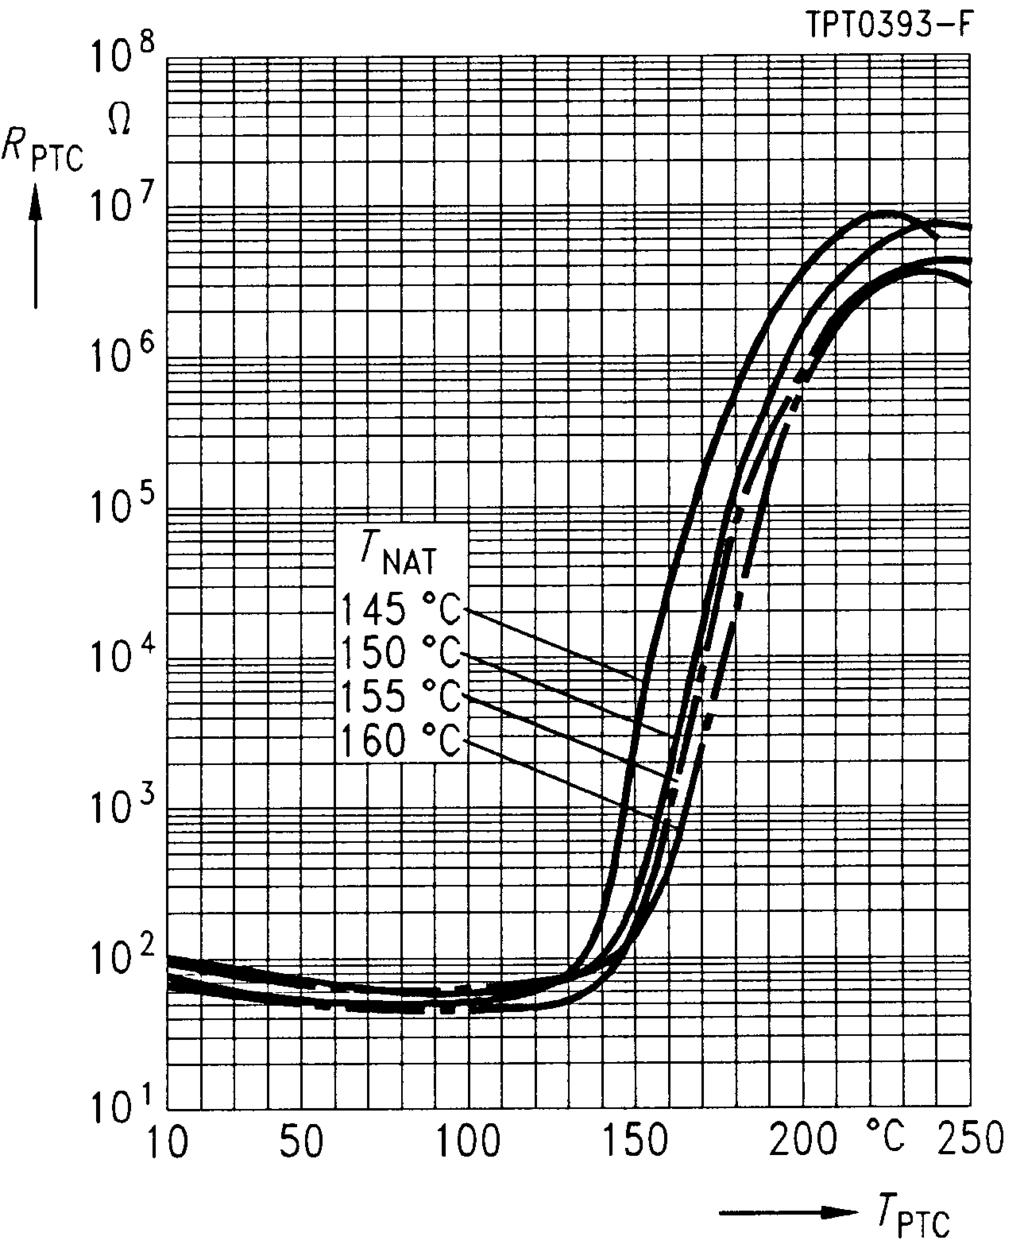 B59801 D 801 Characteristics (typical) PTC resistance R PTC versus PTC temperature T PTC (measured at low signal